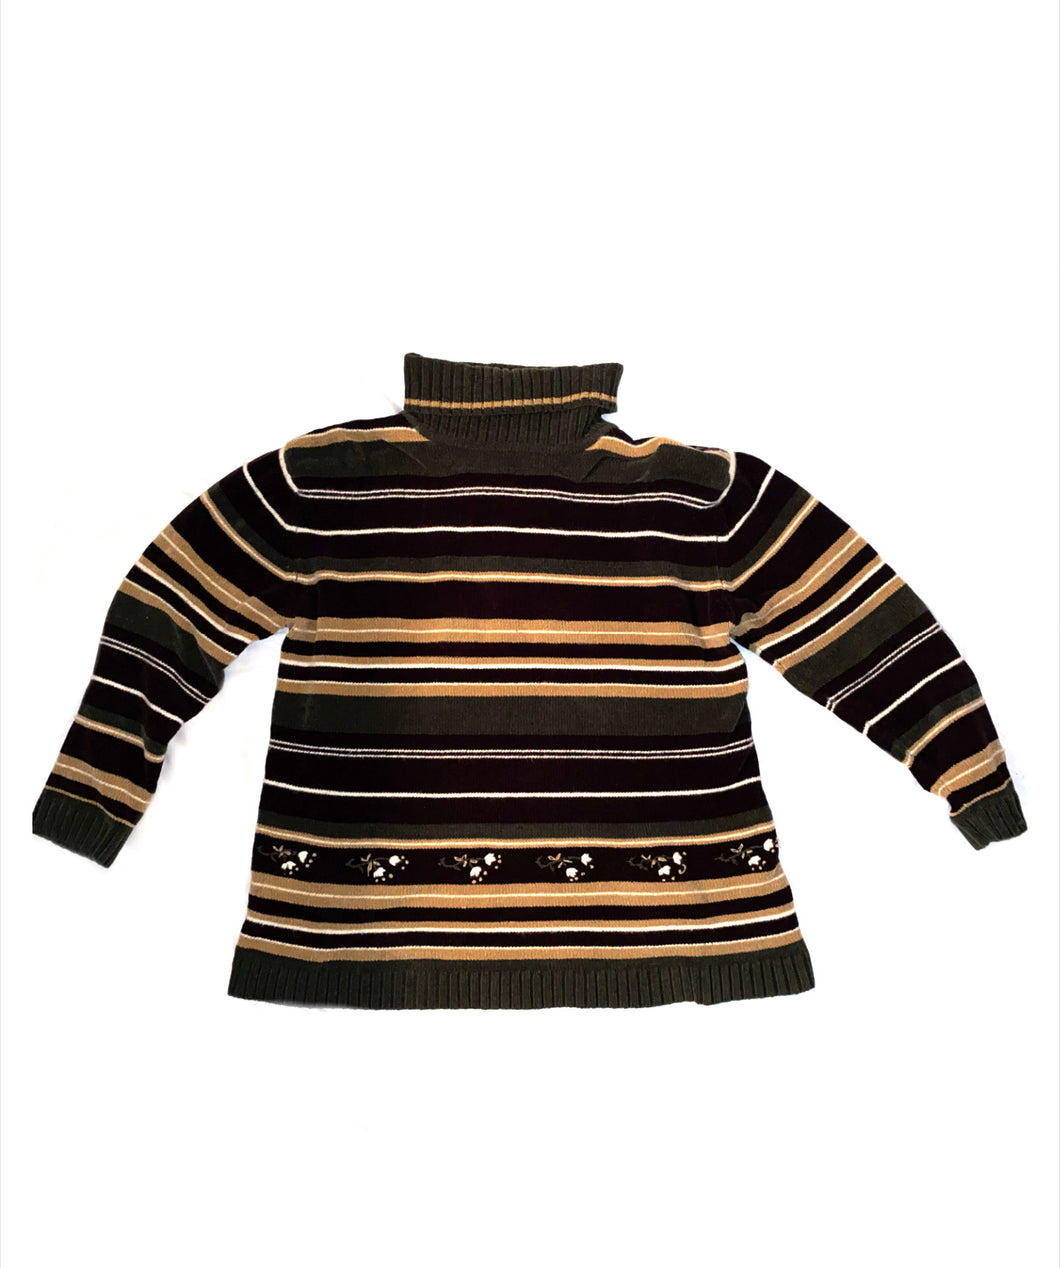 Vintage turtleneck sweater